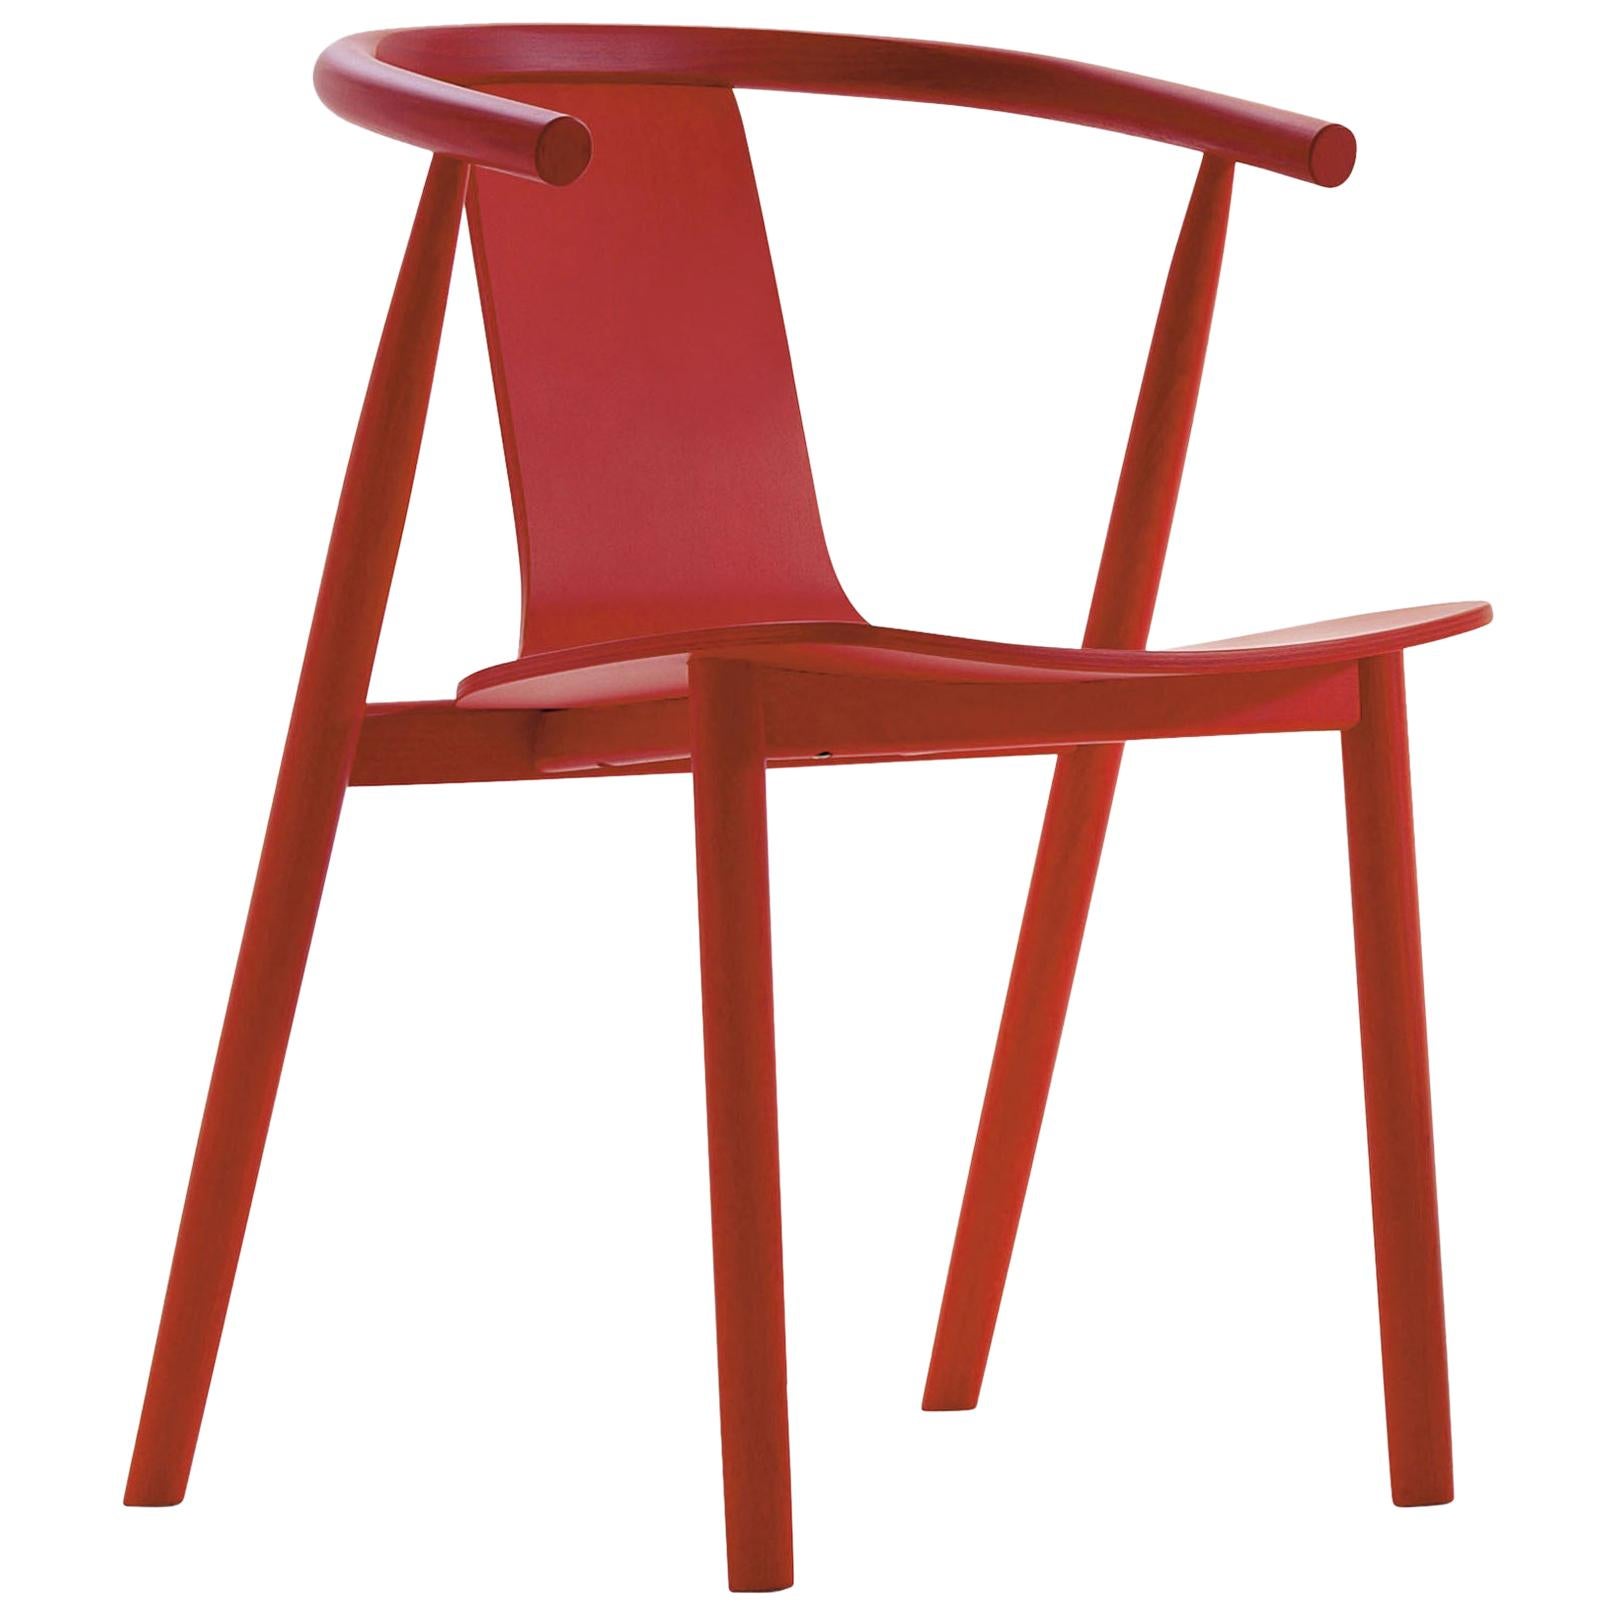 Jasper Morrison Bac Chair in Cherry Red Ash for Cappellini